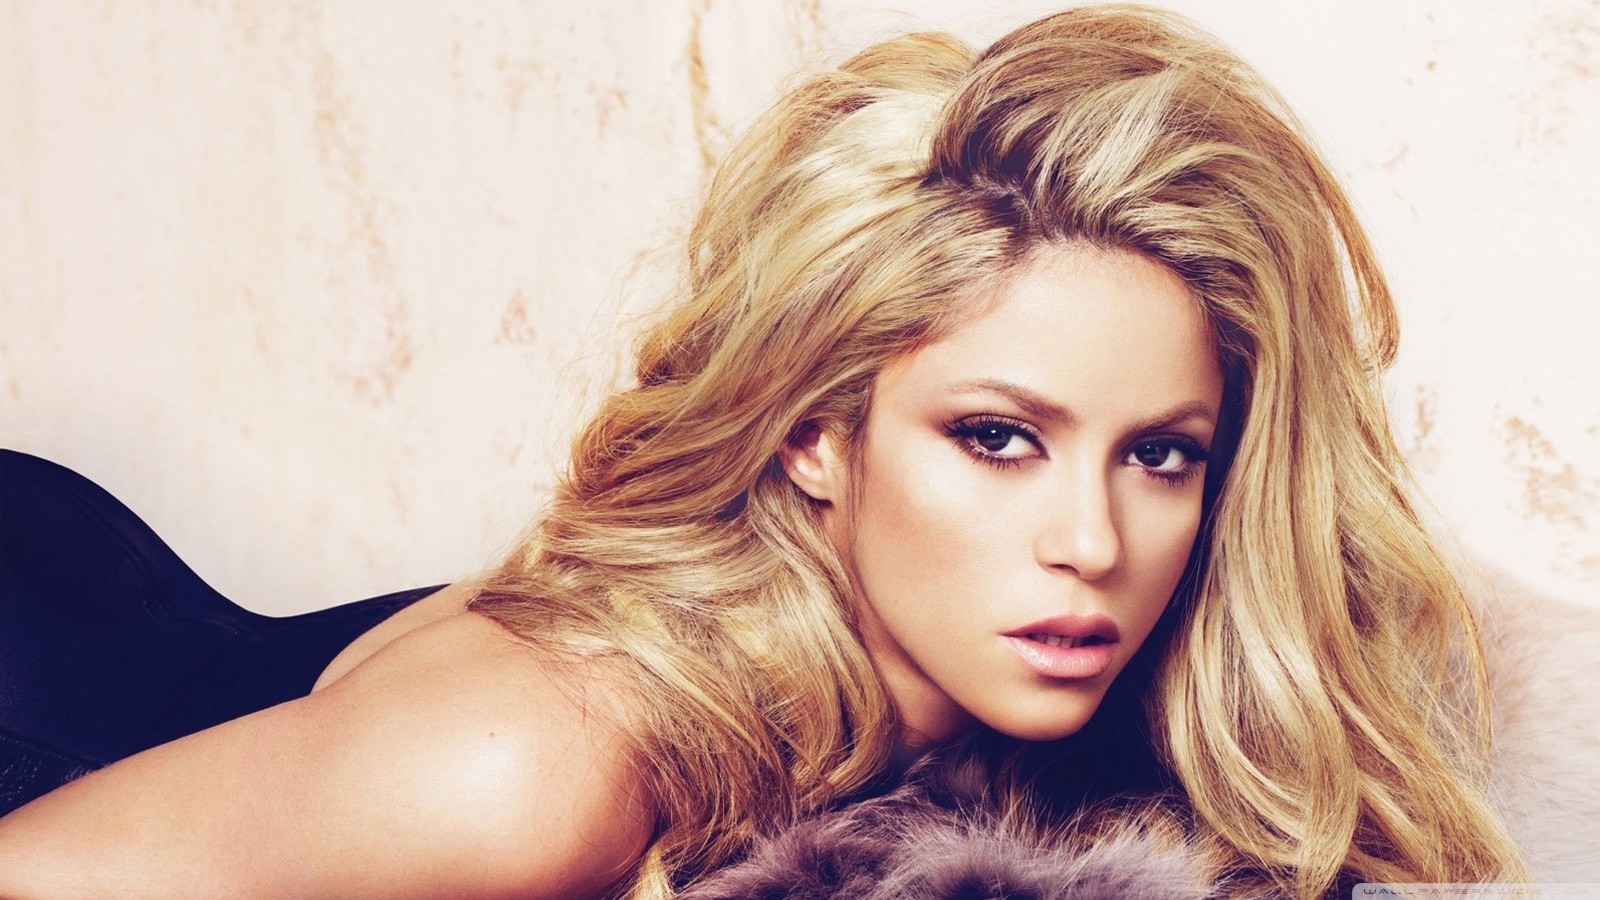 http://ax2pix.persiangig.com/image/Tak/008/Shakira/wallpaper-1311115.jpg